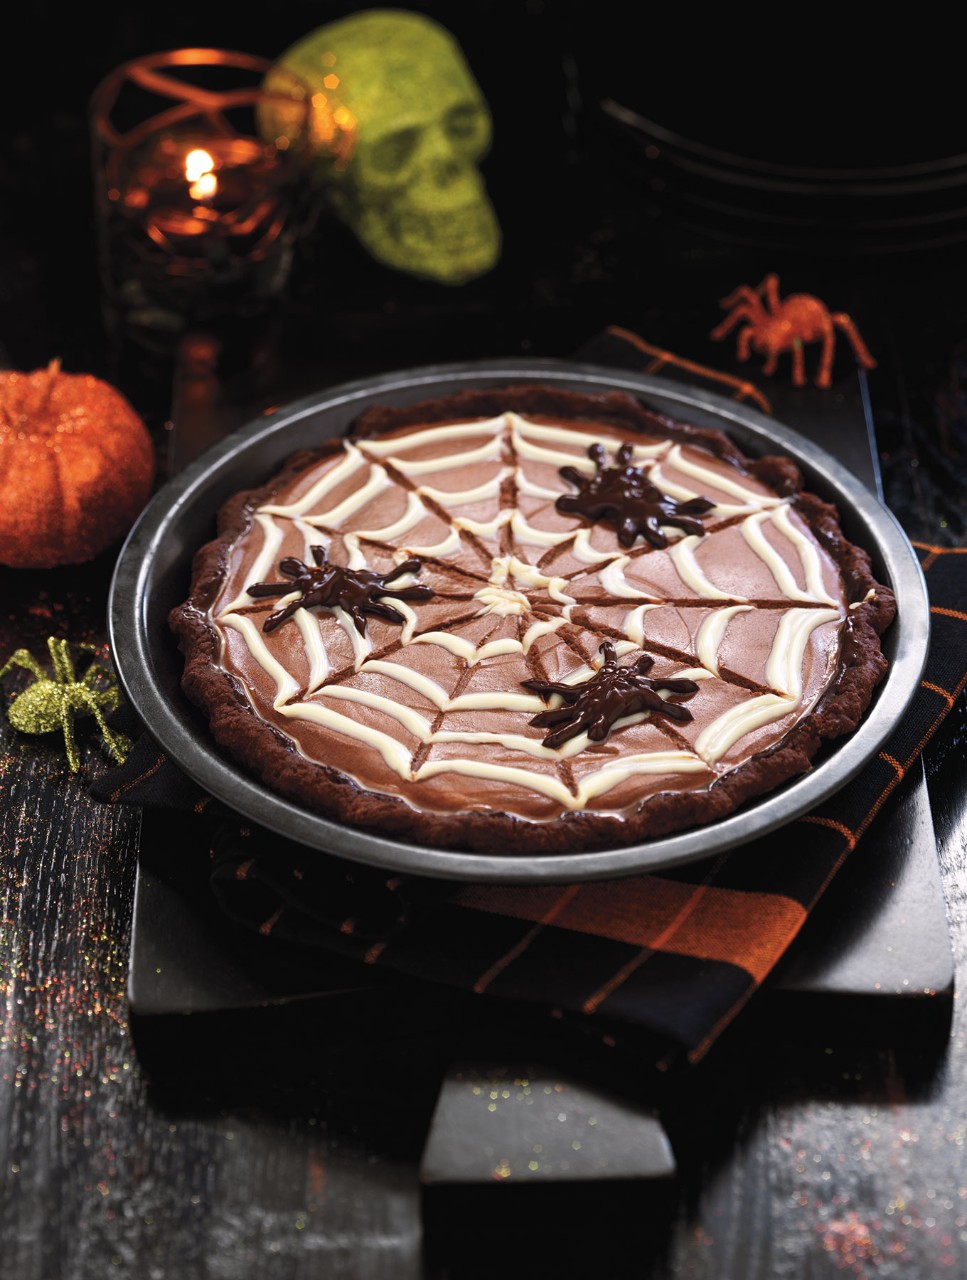 Chocolate Spiderweb Chocolate Cream Pie